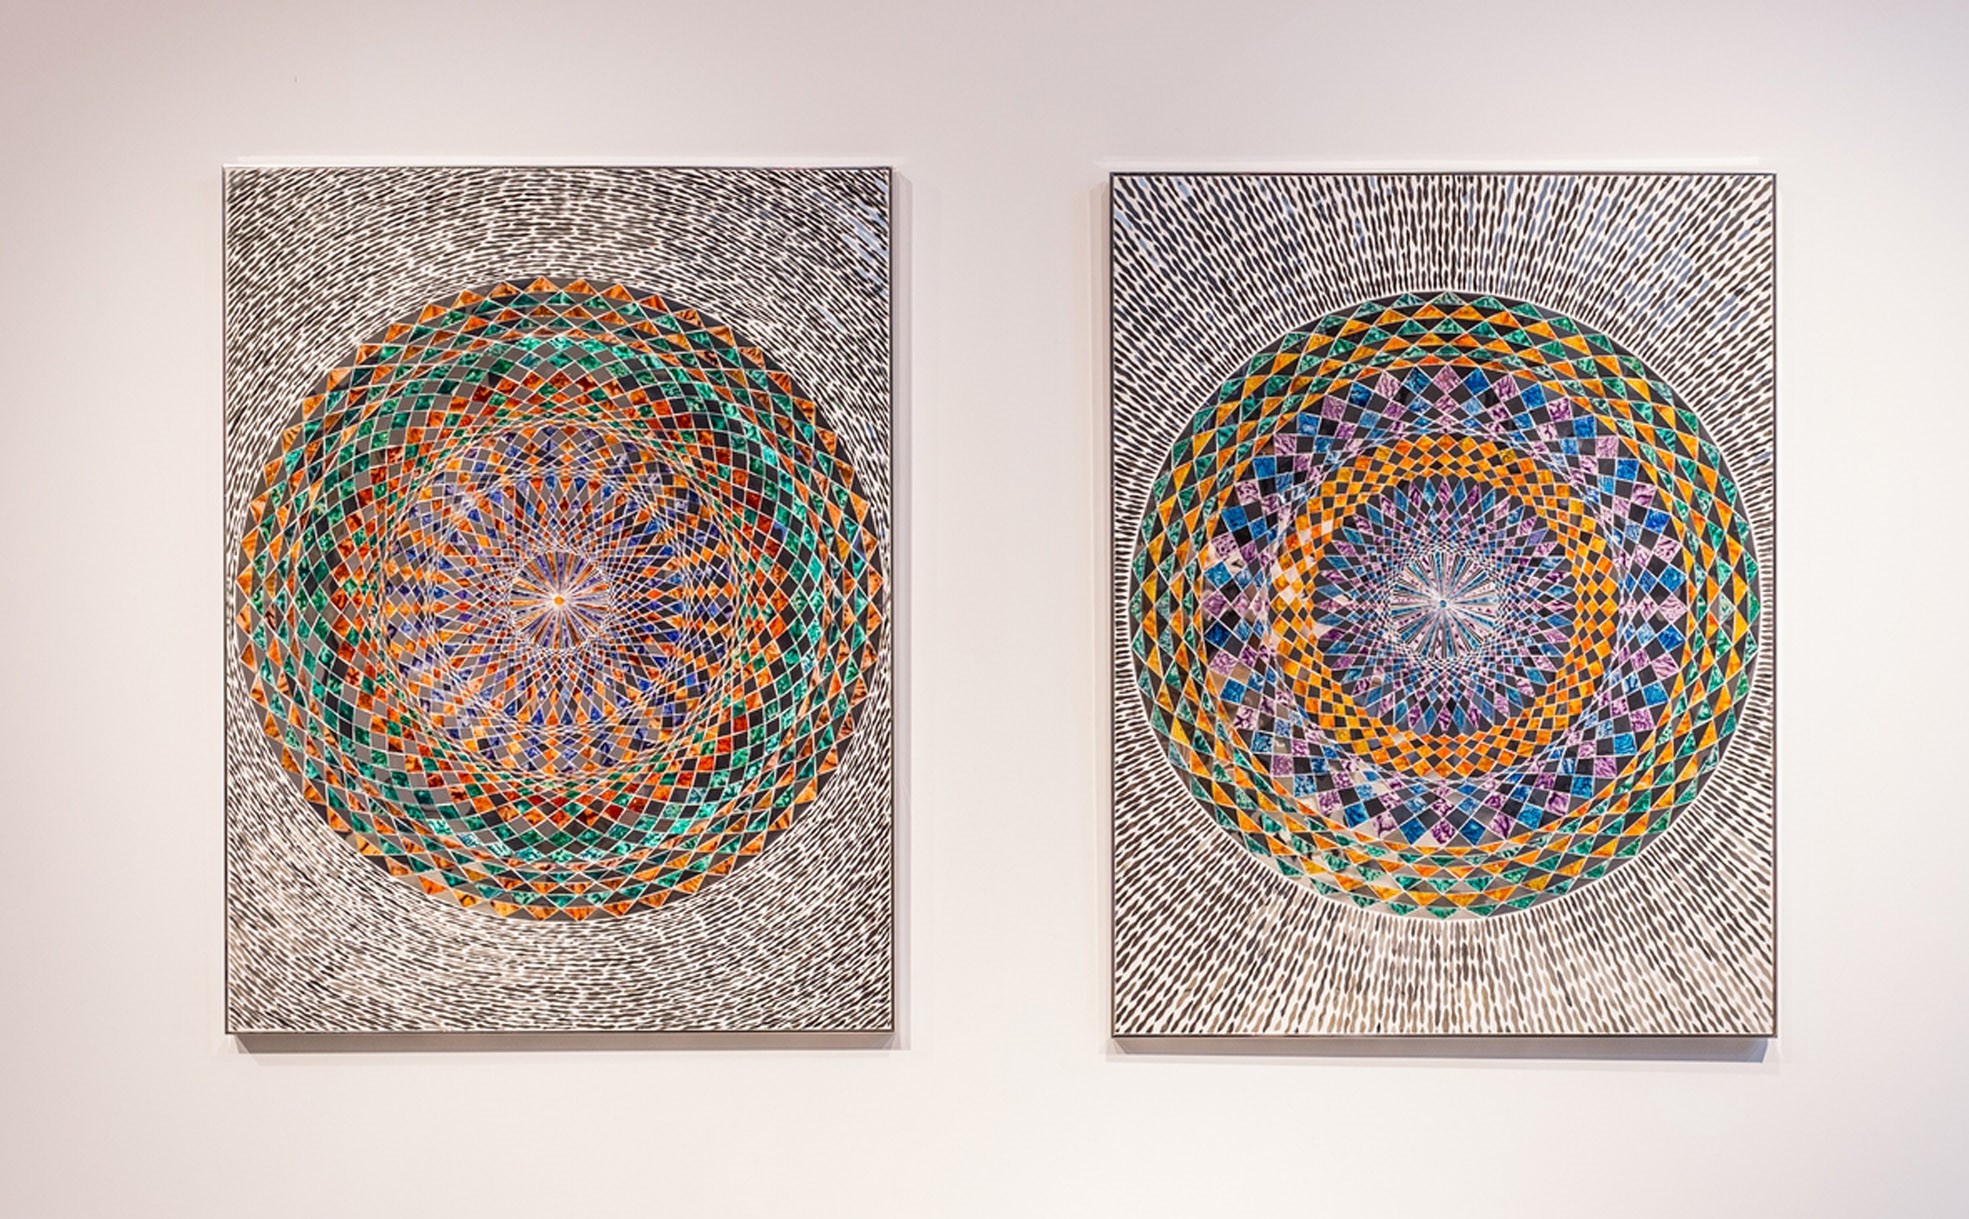 Monir Farmanfarmaian, u201cSunset (left) and Sunrise (right)u201d, Installation view.